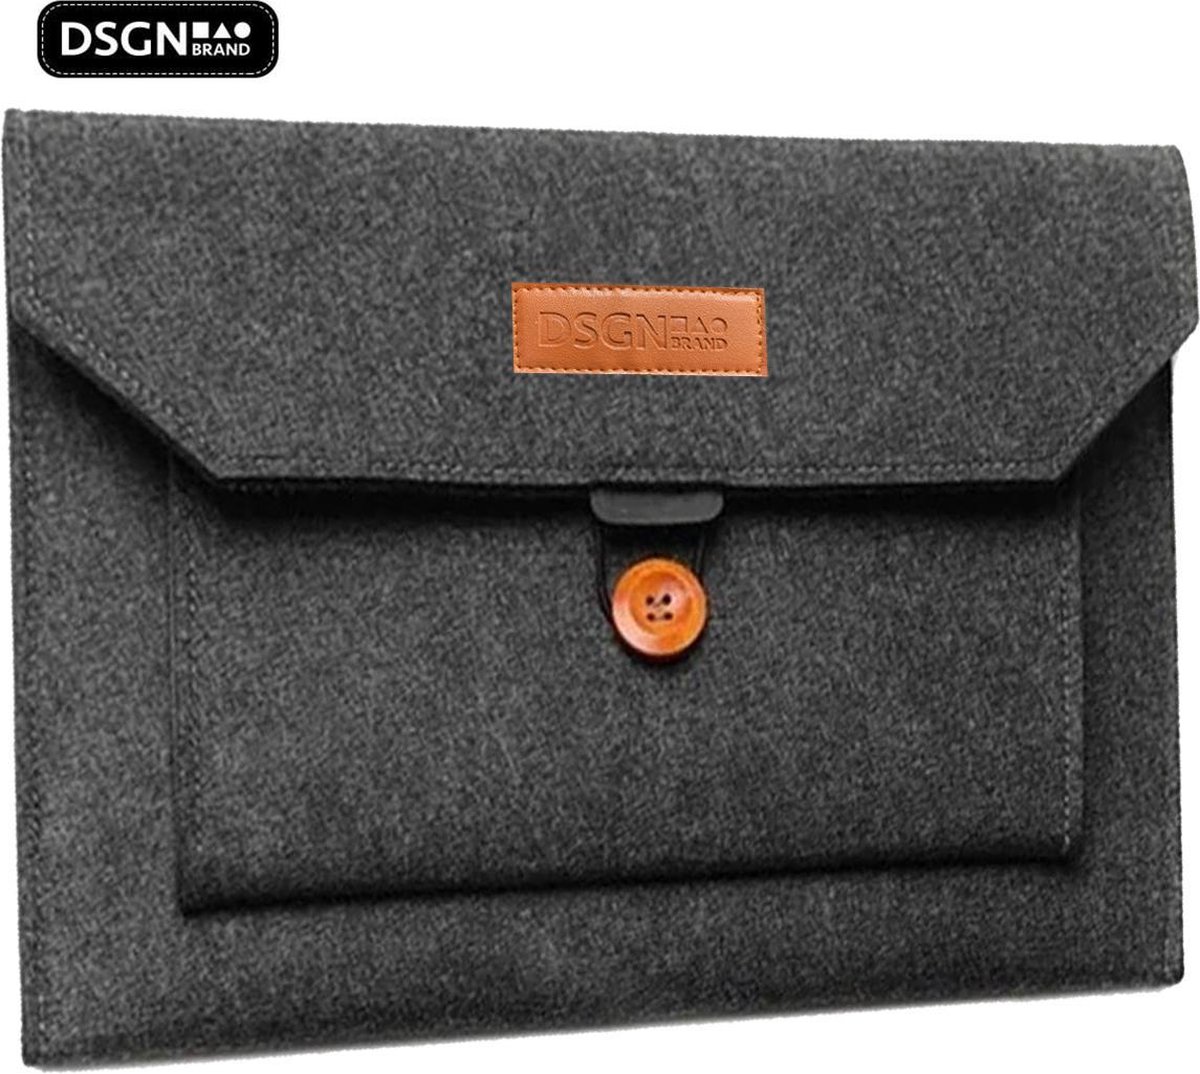 DSGN ENVLP - Laptophoes 14 inch - Notebook - Chromebook - Laptop Sleeve Hoes Case - Vilten - Extra Vak - Knoopsluiting - Zwart